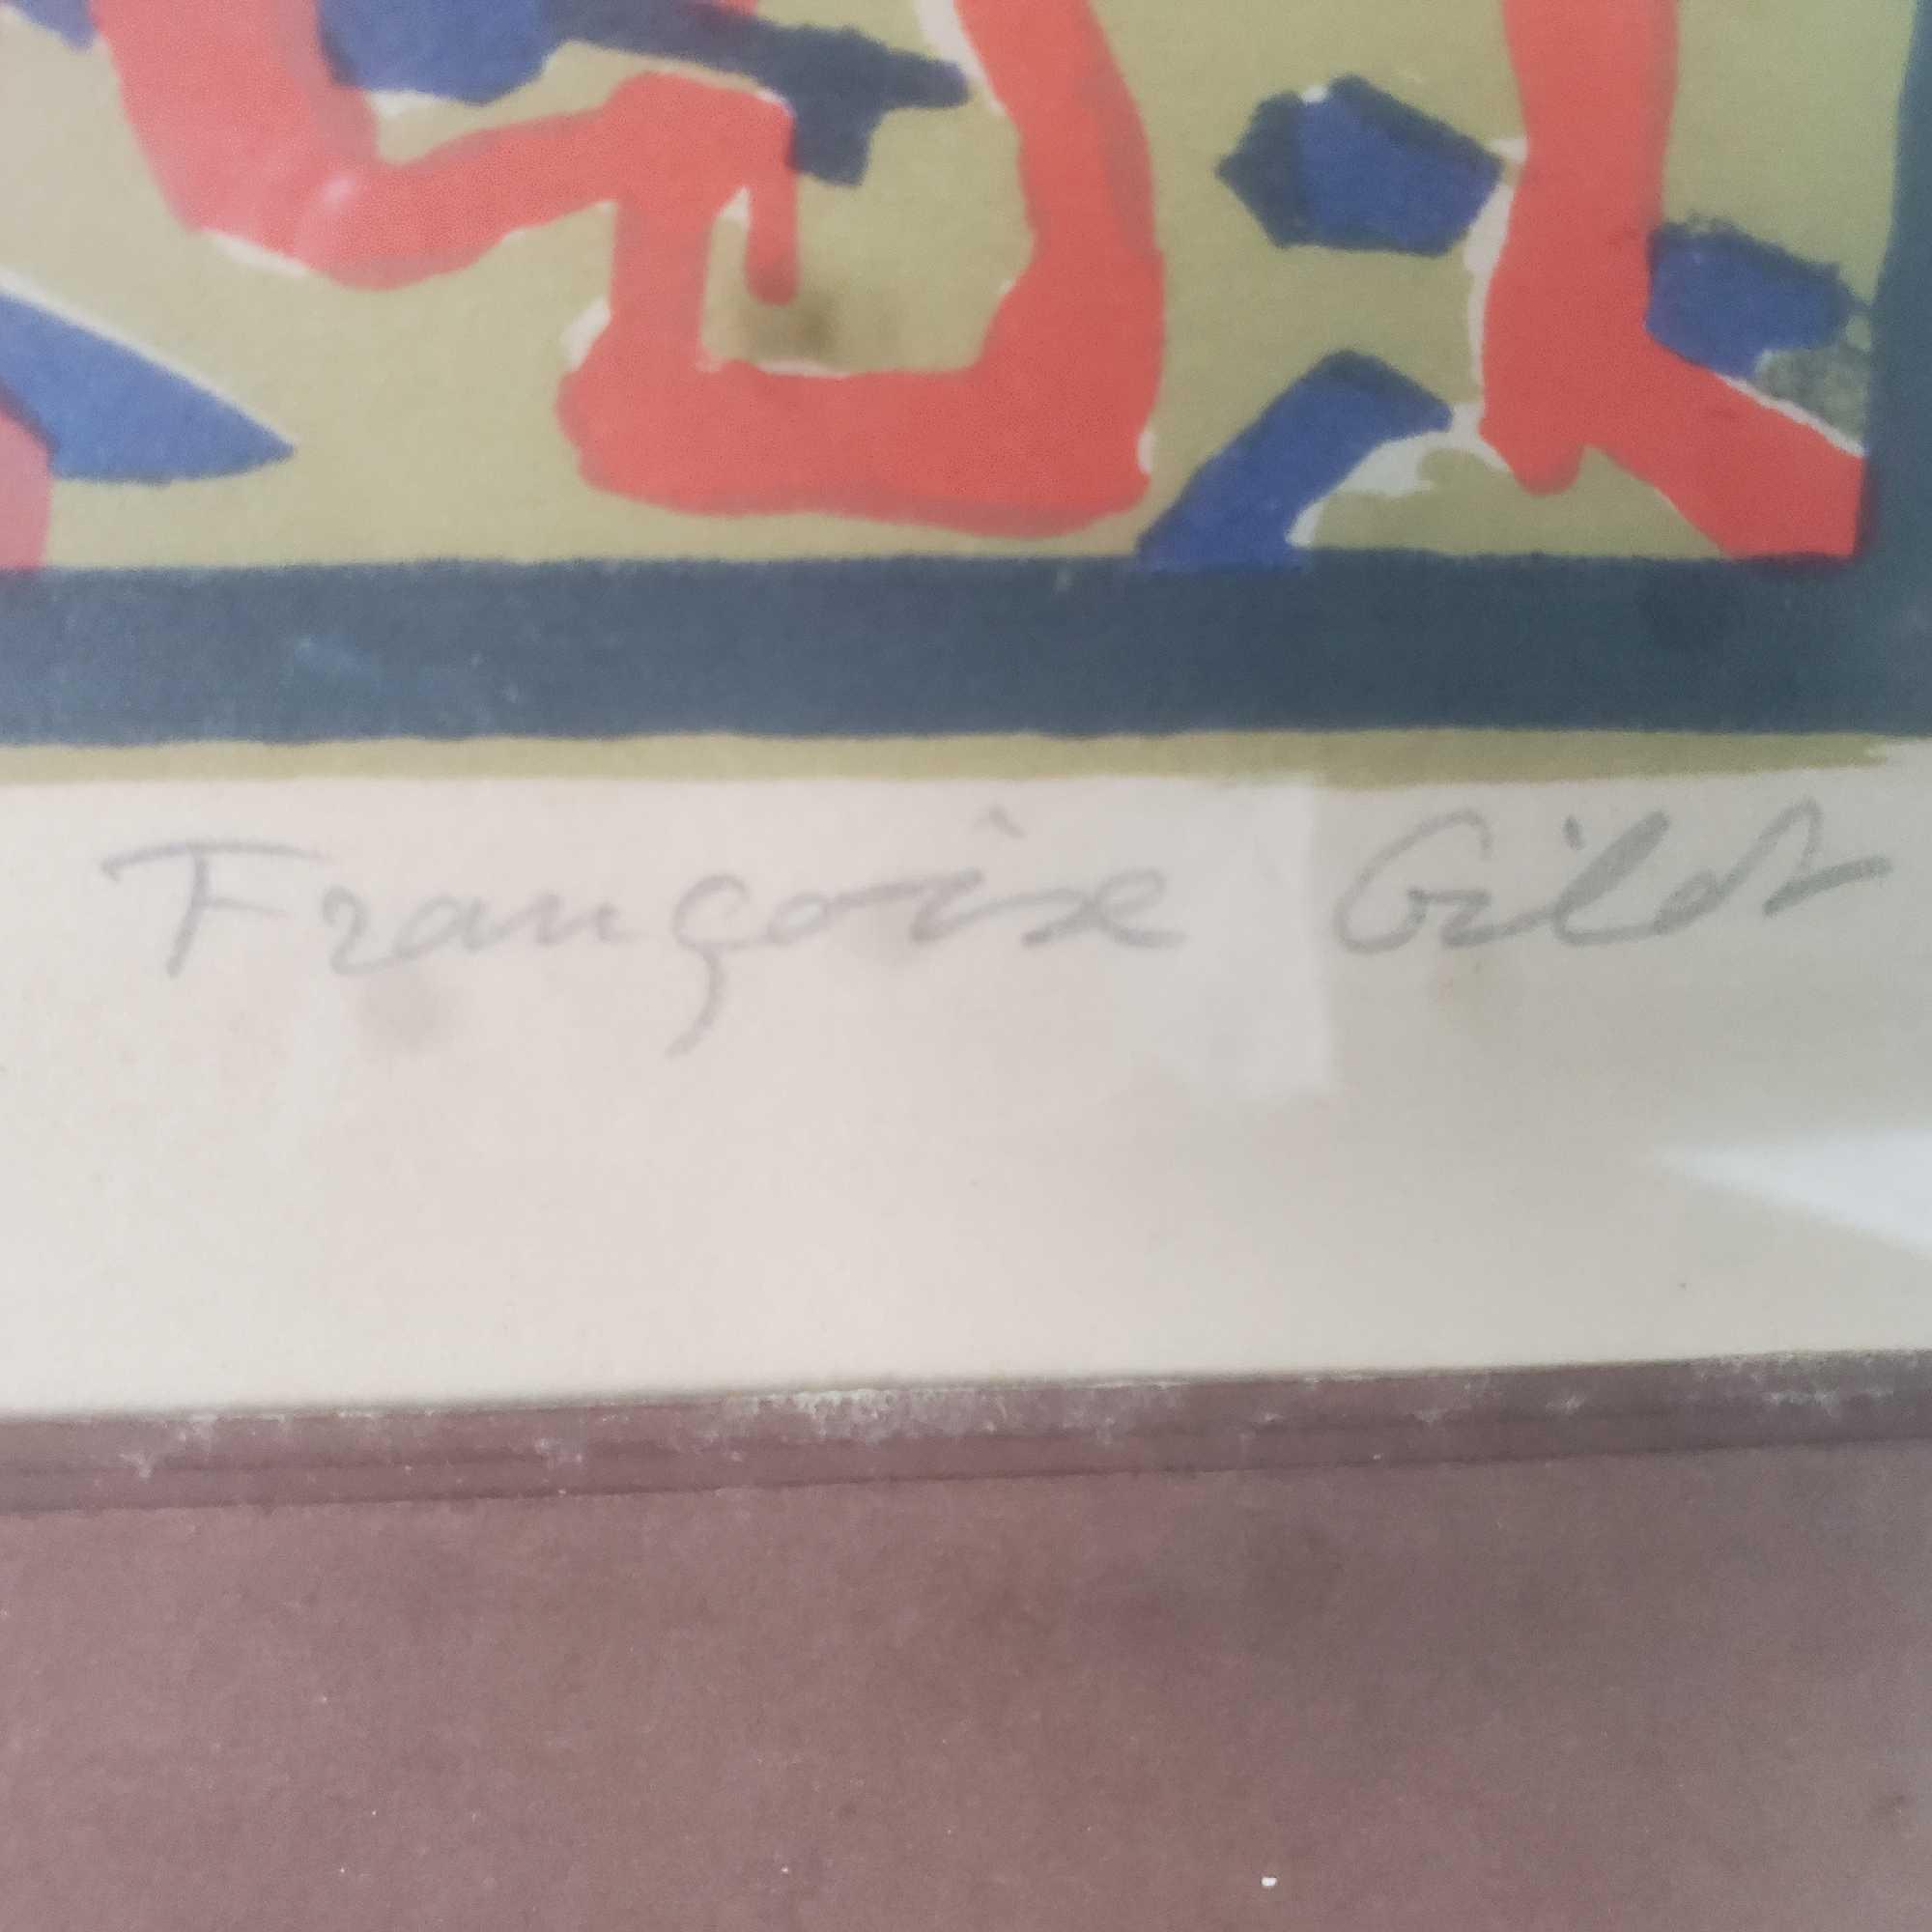 Framed artwork titled Japanese Harmony signed Francoise Gilot